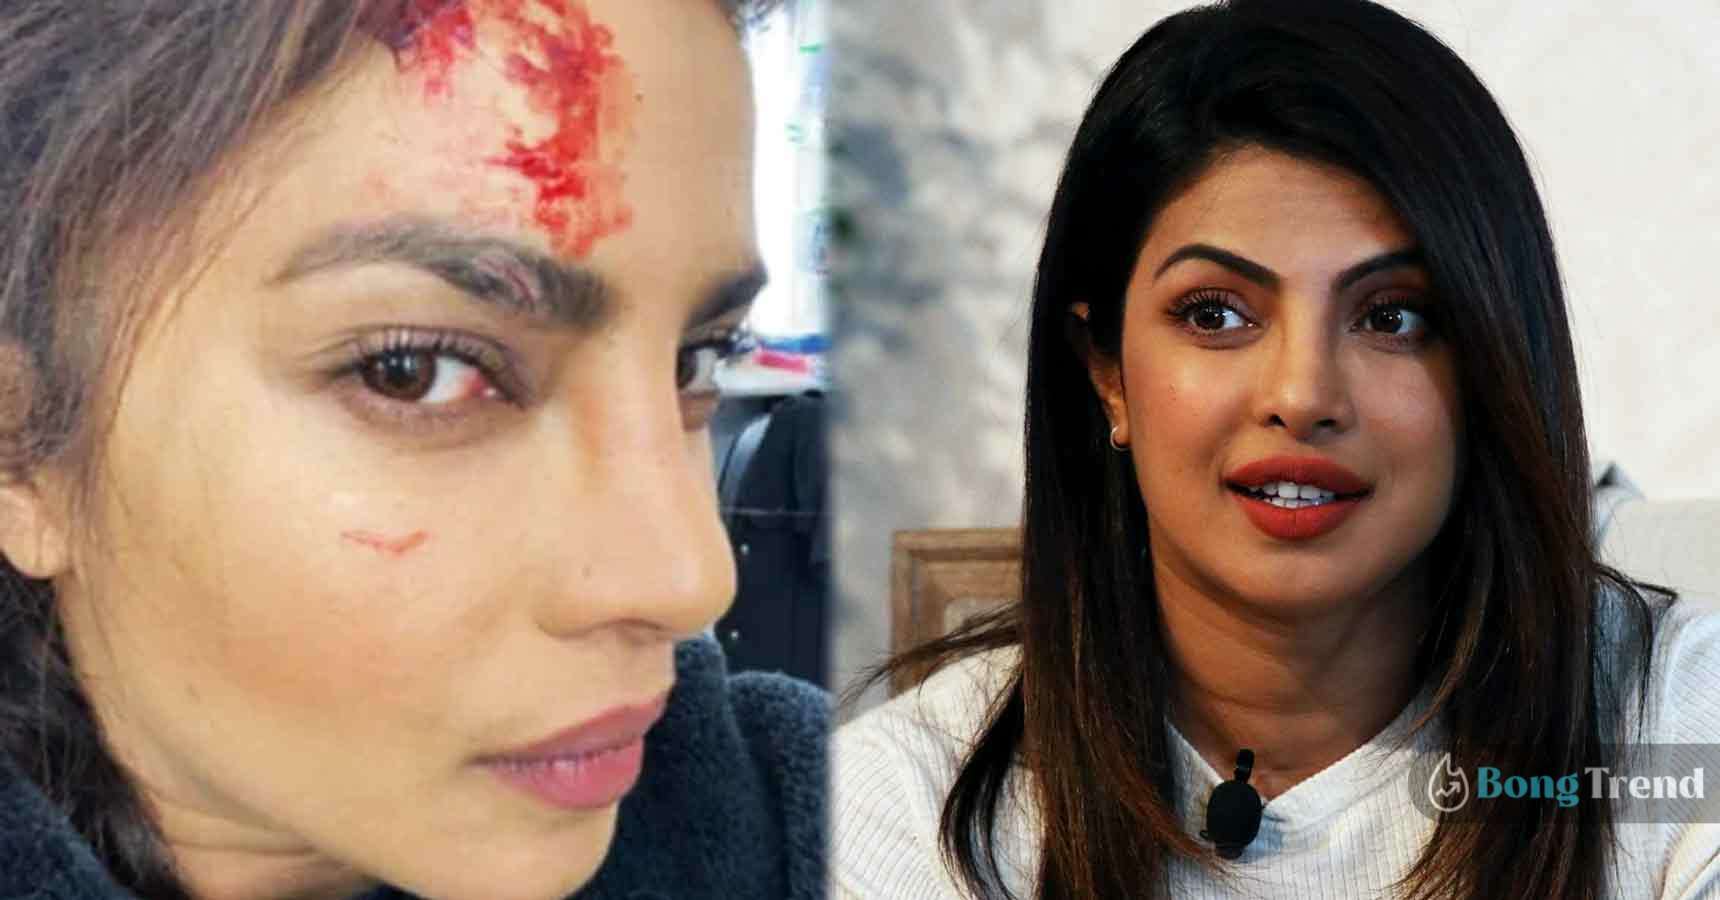 Priyanka Chopra,প্রিয়াঙ্কা চোপড়া,Injured,জখম,Citadel,সিটাডেল,Web Series,ওয়েব সিরিজ,Priyanka Chopra Injured while shooting of Citadel web series